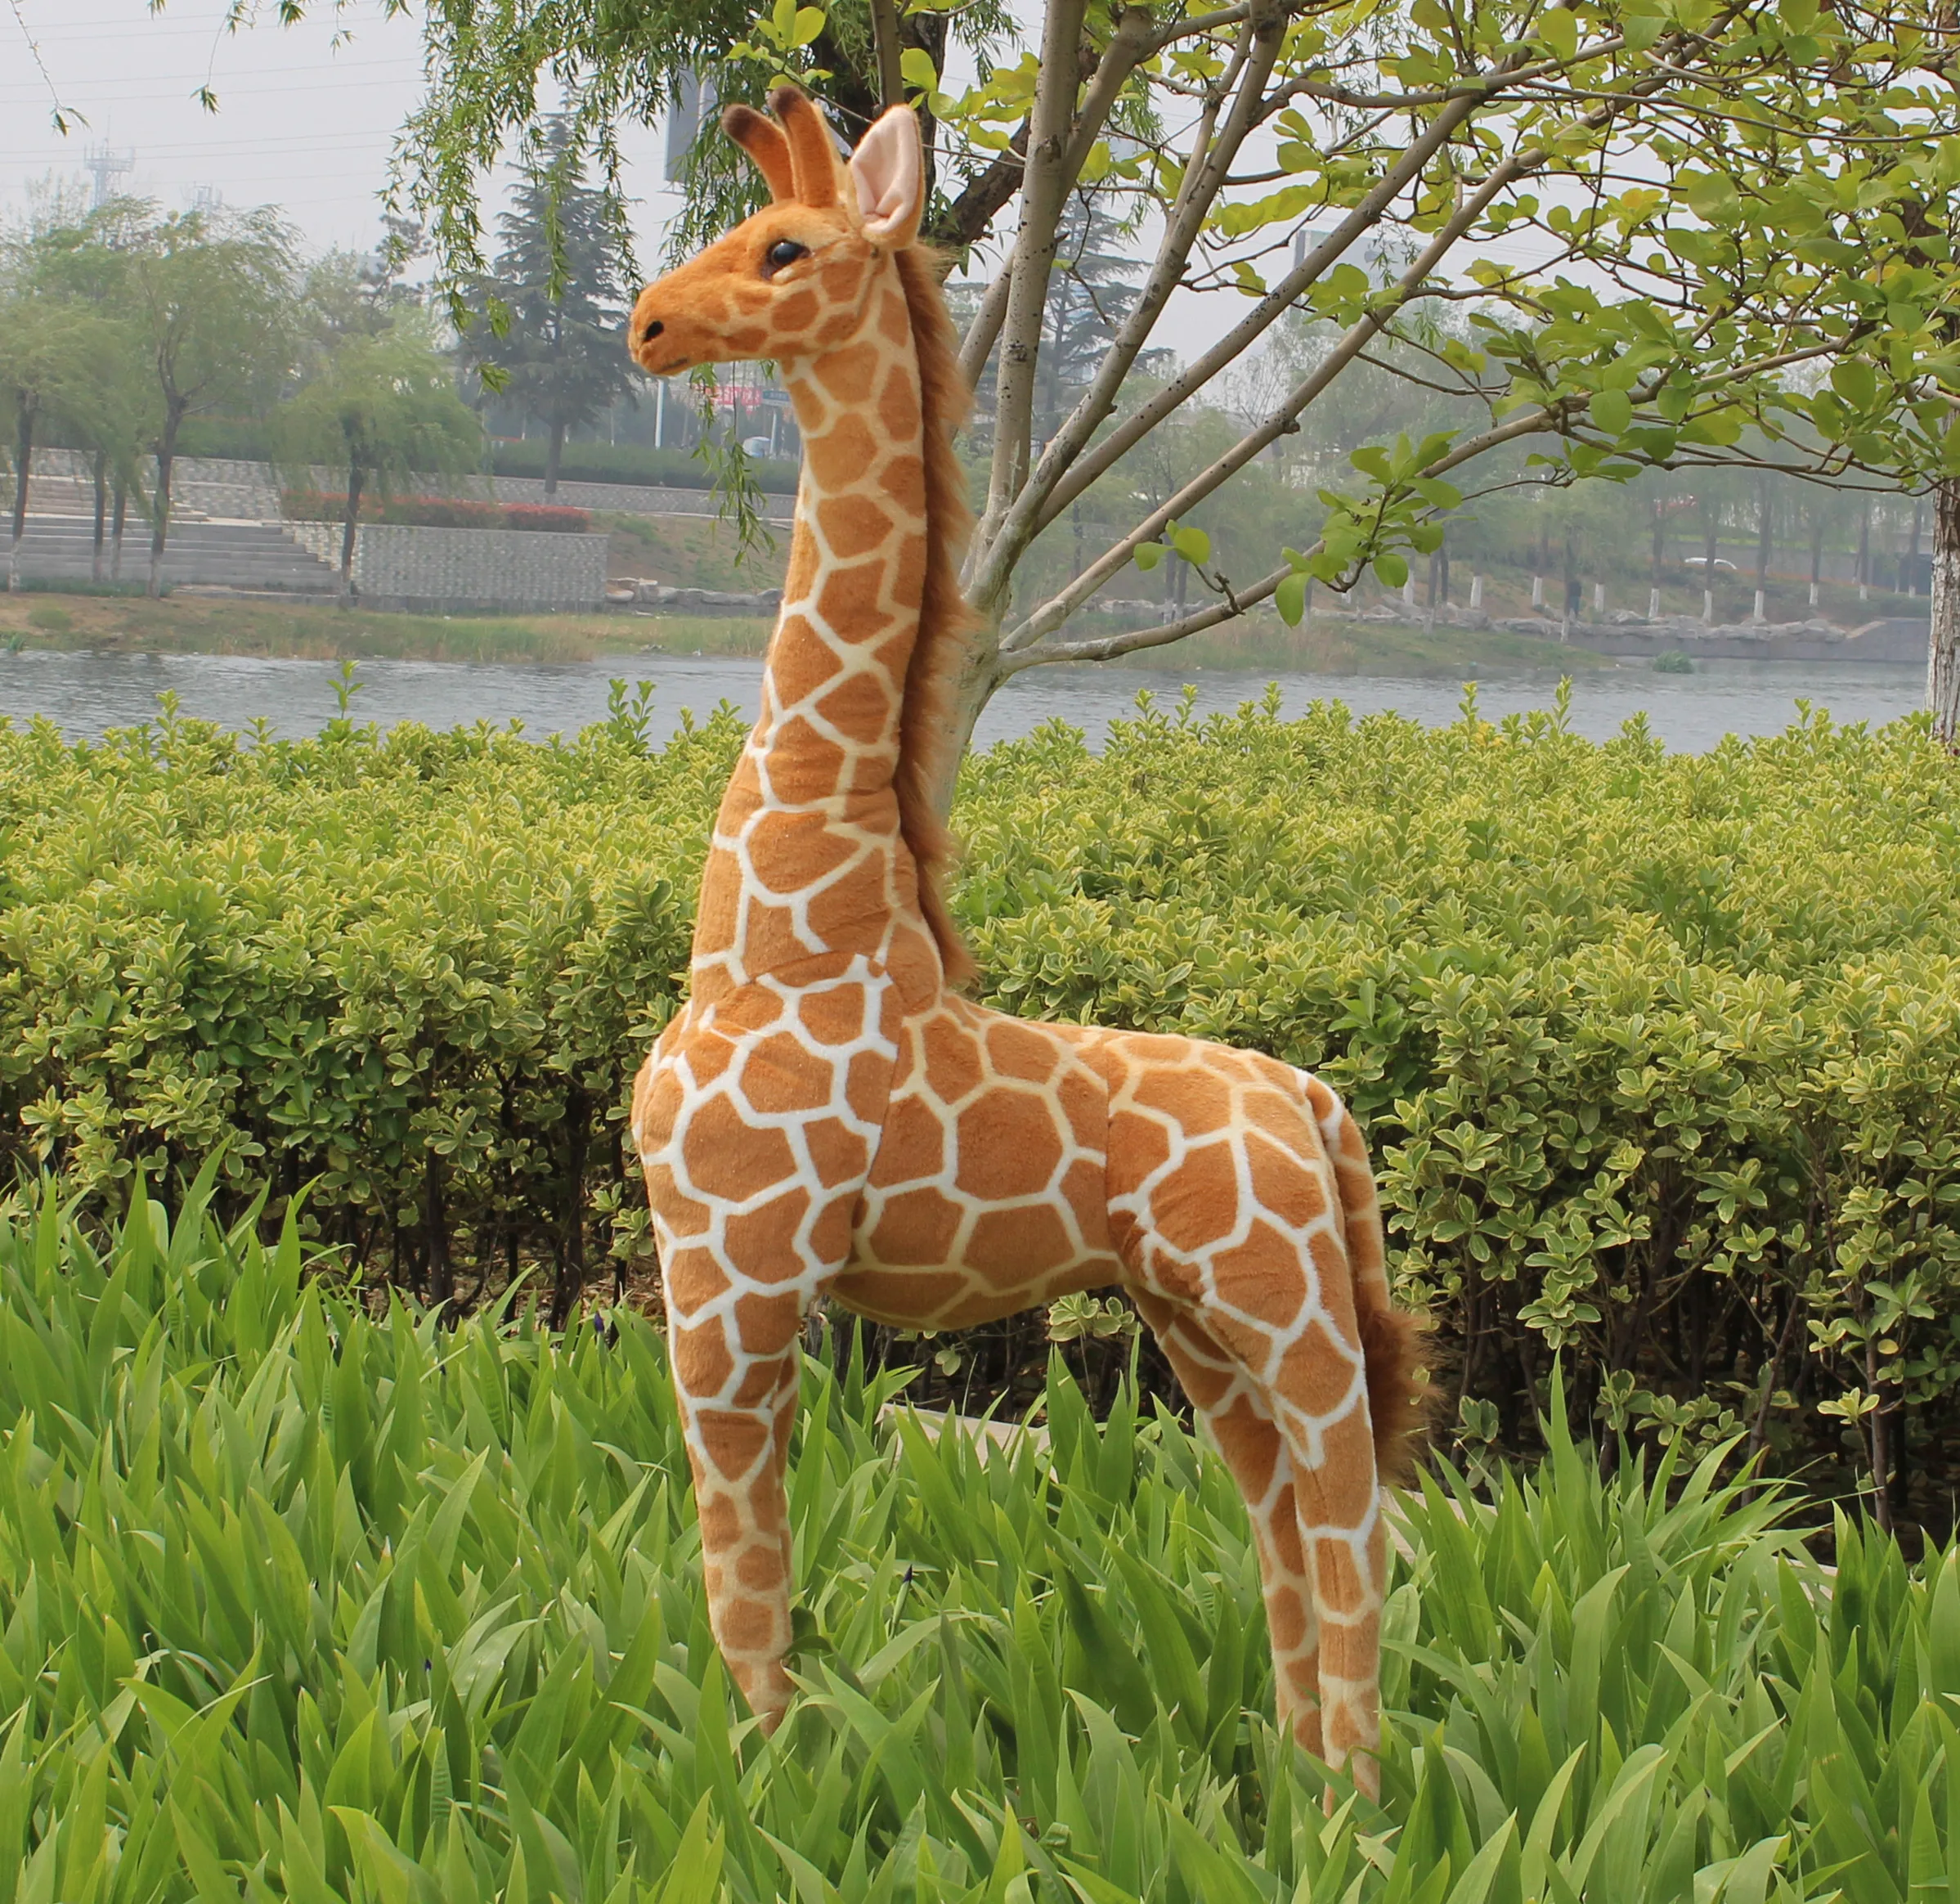 

stuffed plush toy simulation animal standing giraffe large 140cm plush toy birthday gift s4270